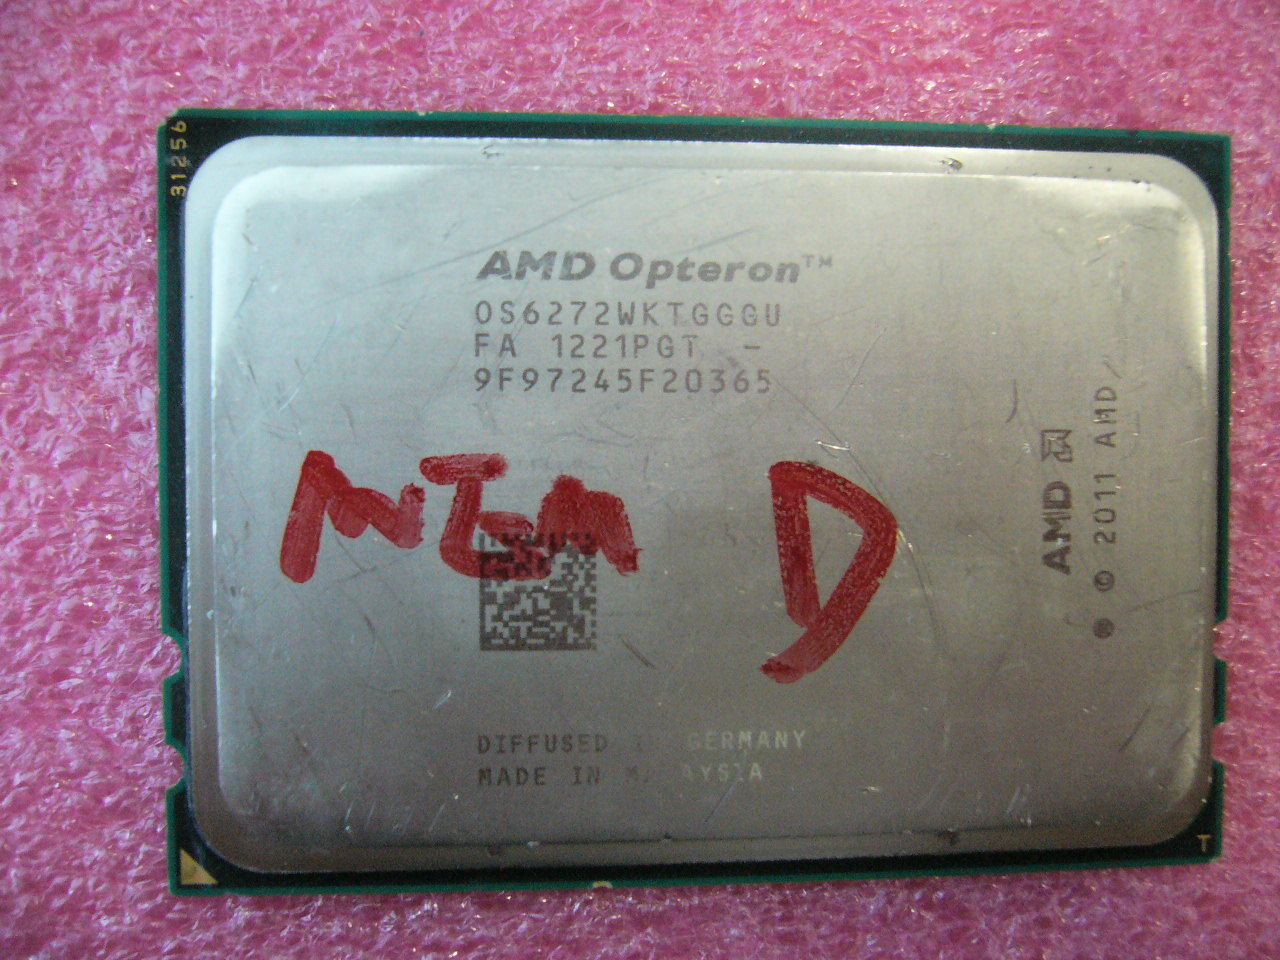 QTY 1x AMD Opteron 6272 2.1GHz Sixteen Core OS6272WKTGGGU CPU Tested G34 mem D